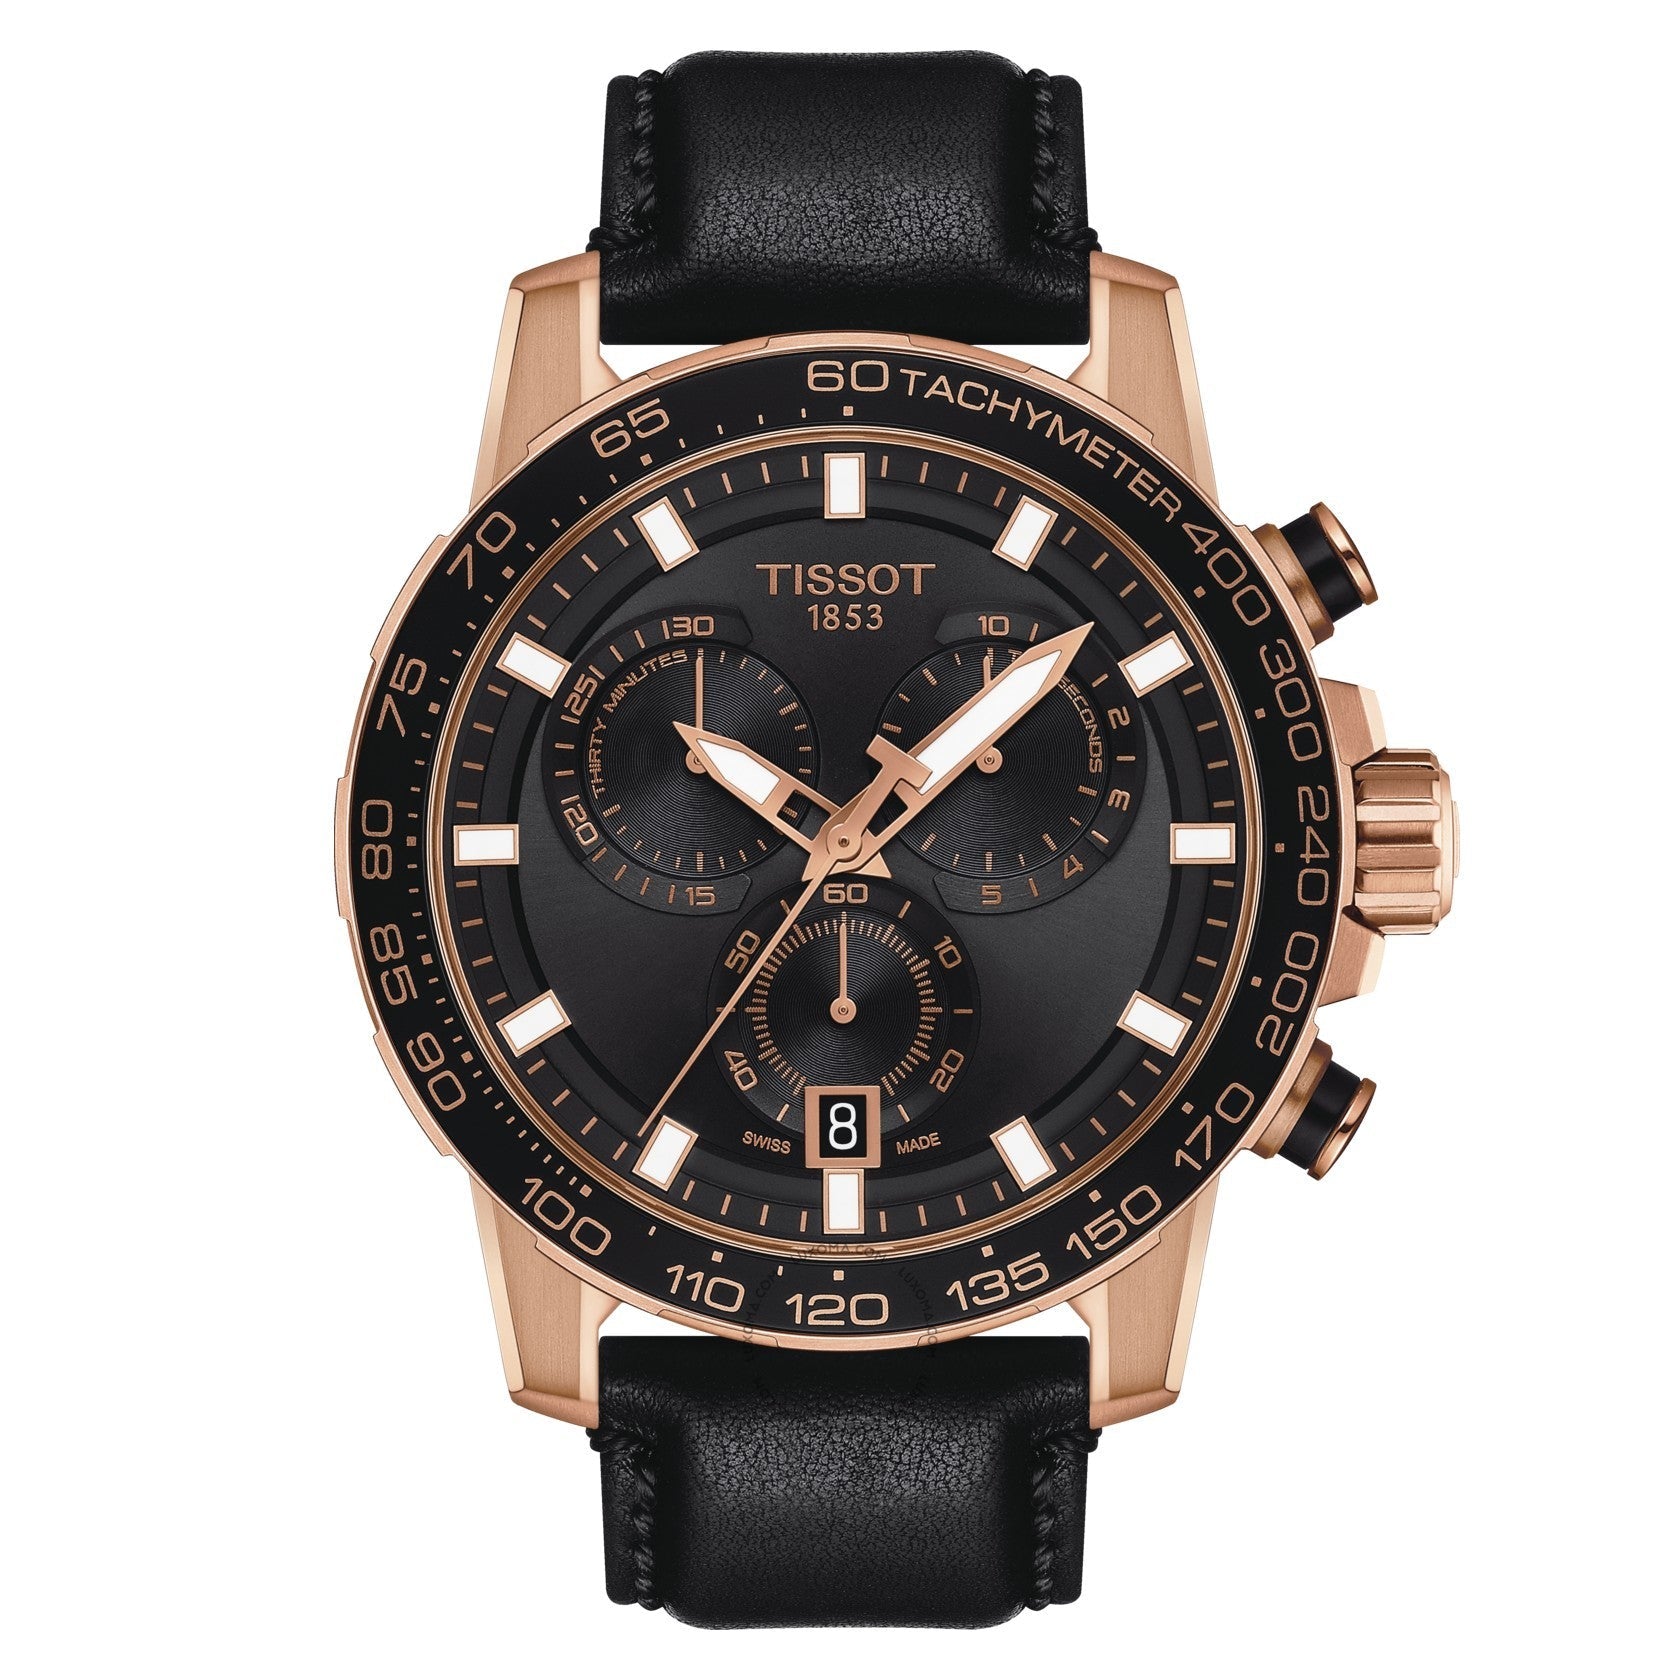 Tissot T-Sport Chronograph Black Dial Men's Watch T125.617.36.051.00